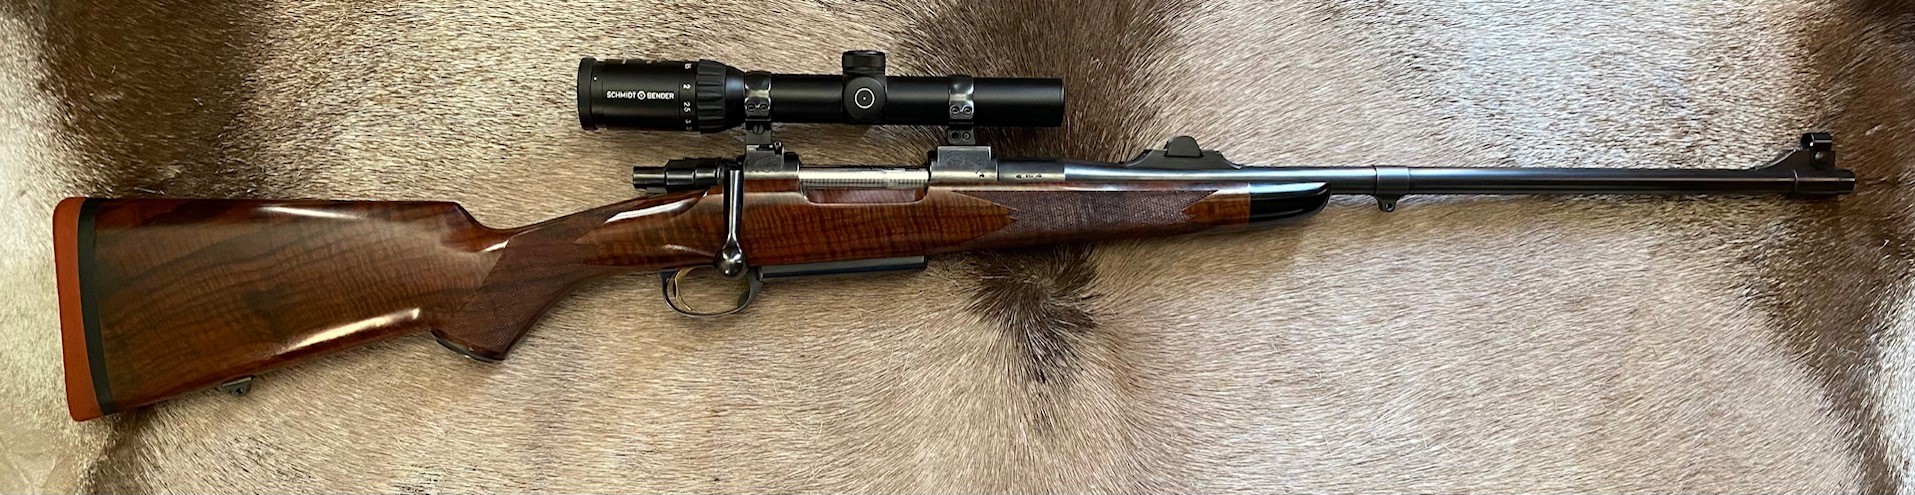 NECG Custom  Mauser  9,3x62